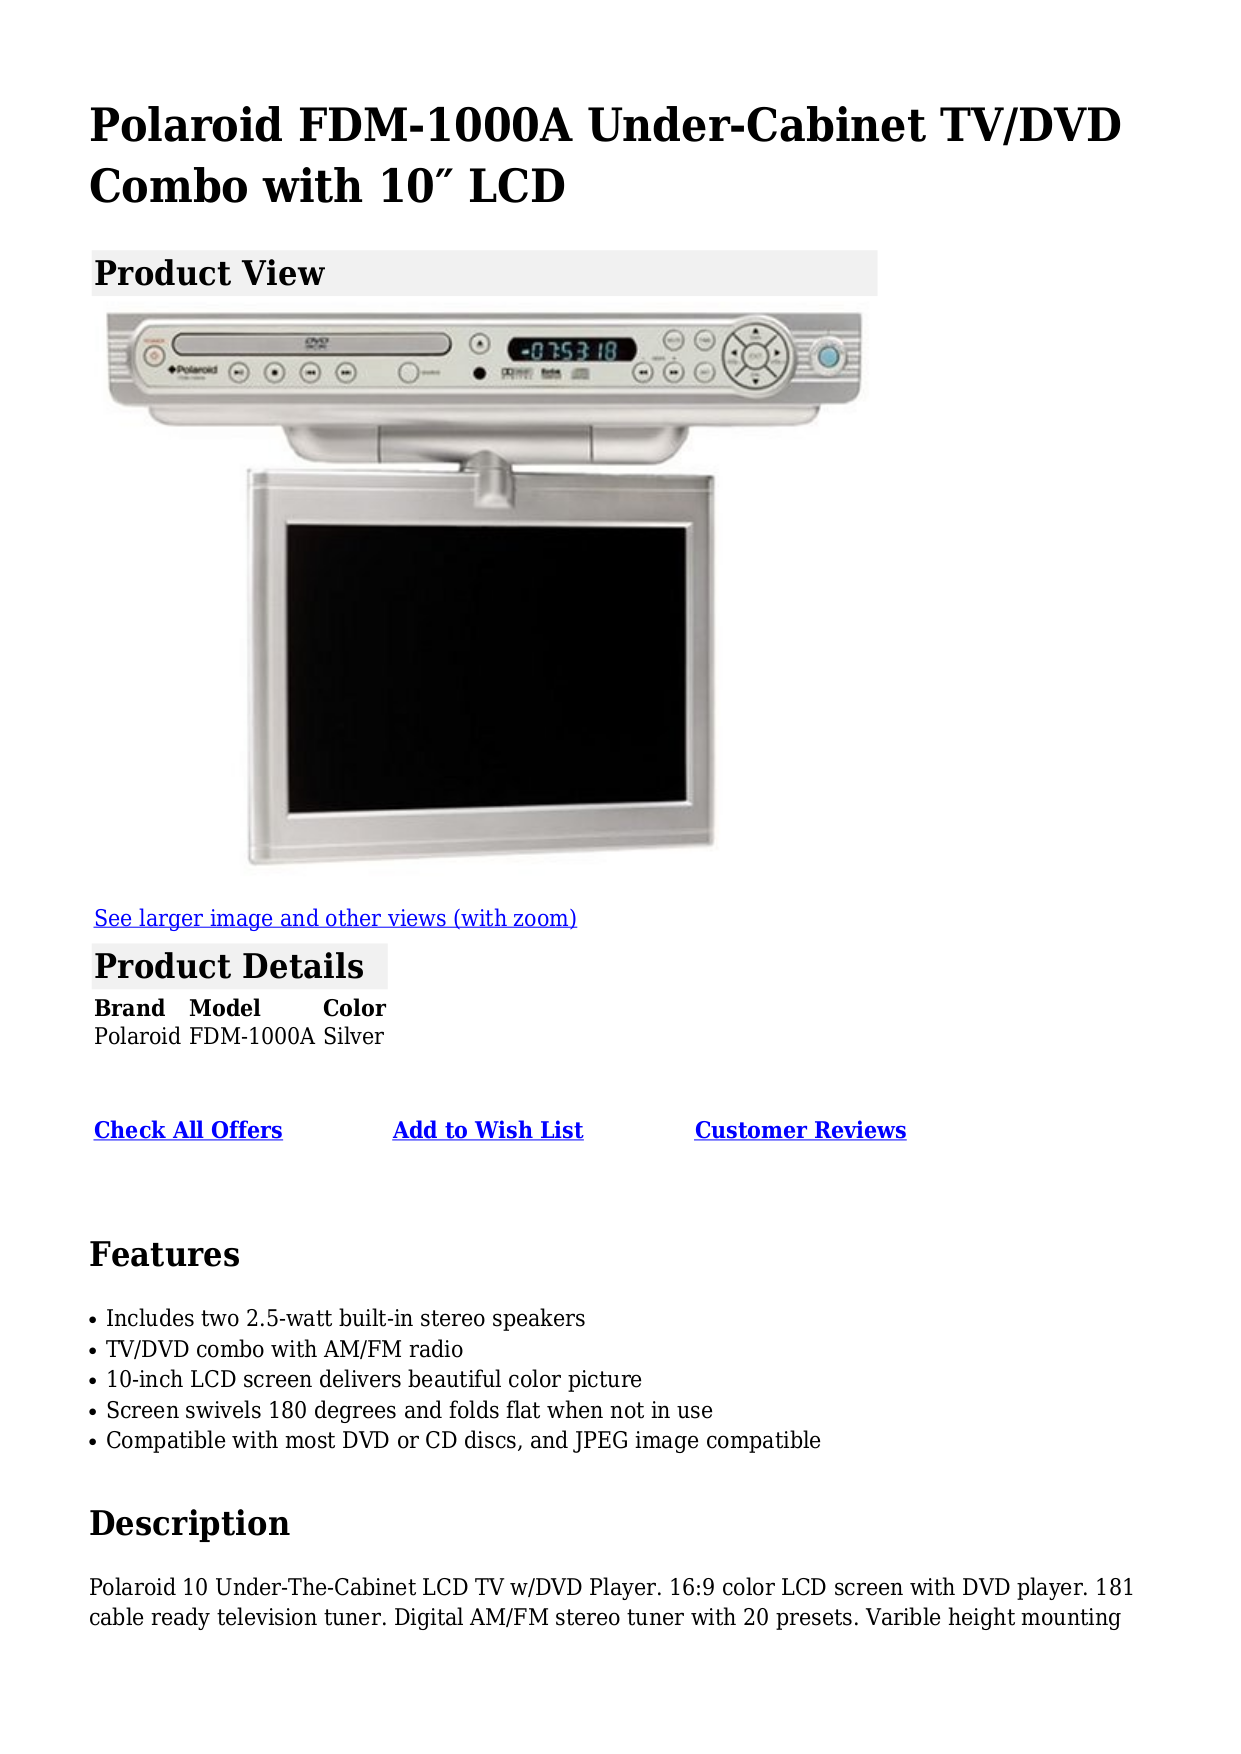 Download Free Pdf For Polaroid Fdm 1000a Tv Manual